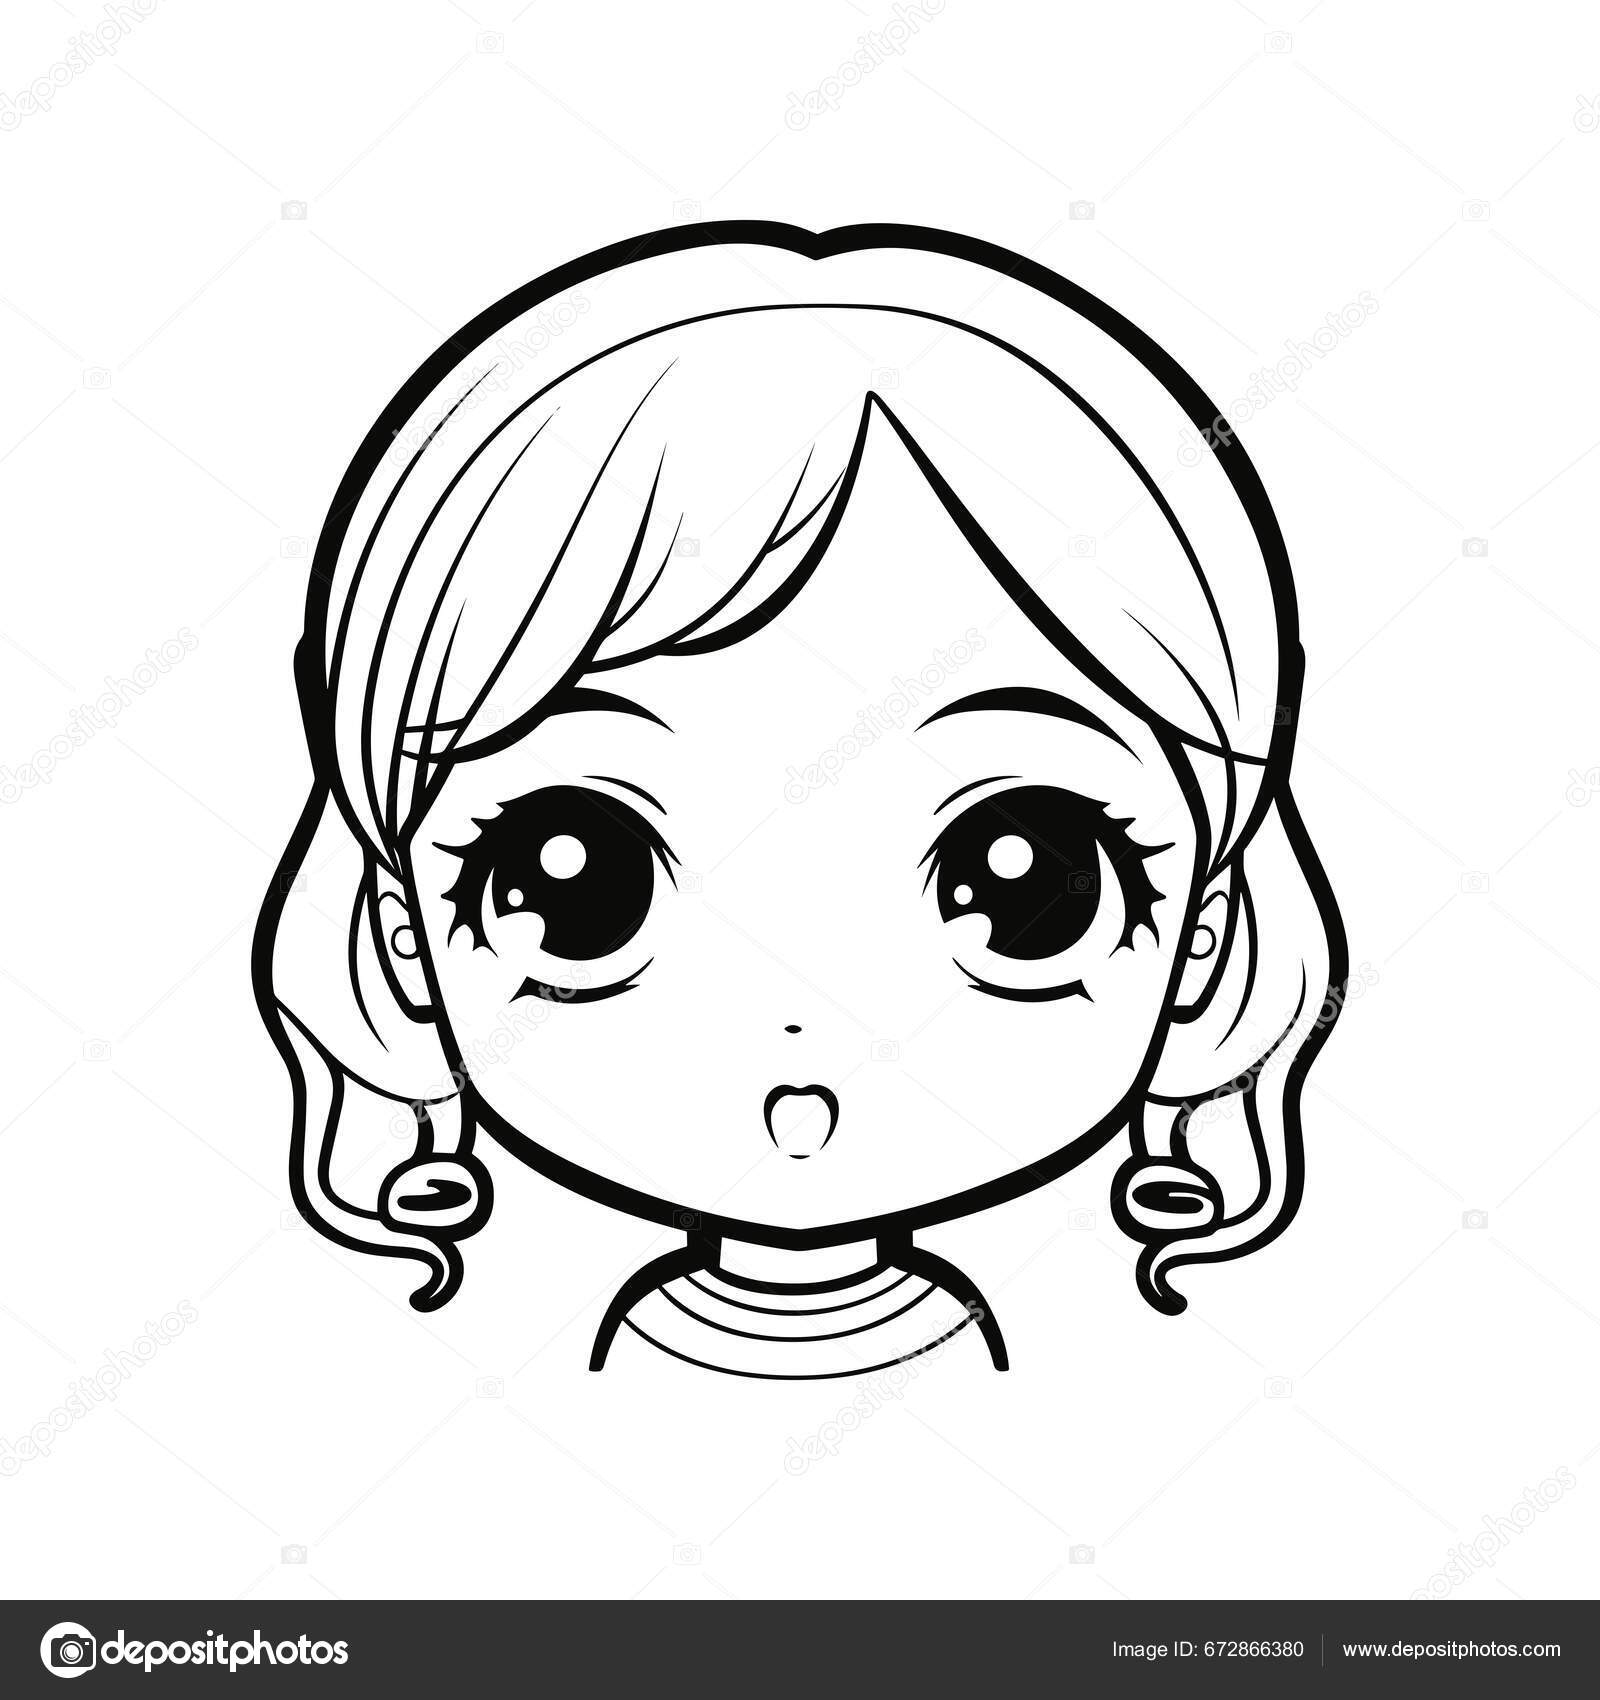 Cute Girl Anime Manga Pencil Sketch Pencil Color Drawing Inking Black and  White Trending Pixiv Fanbox Art by Ilya Kuvshinov and Ghibli · Creative  Fabrica